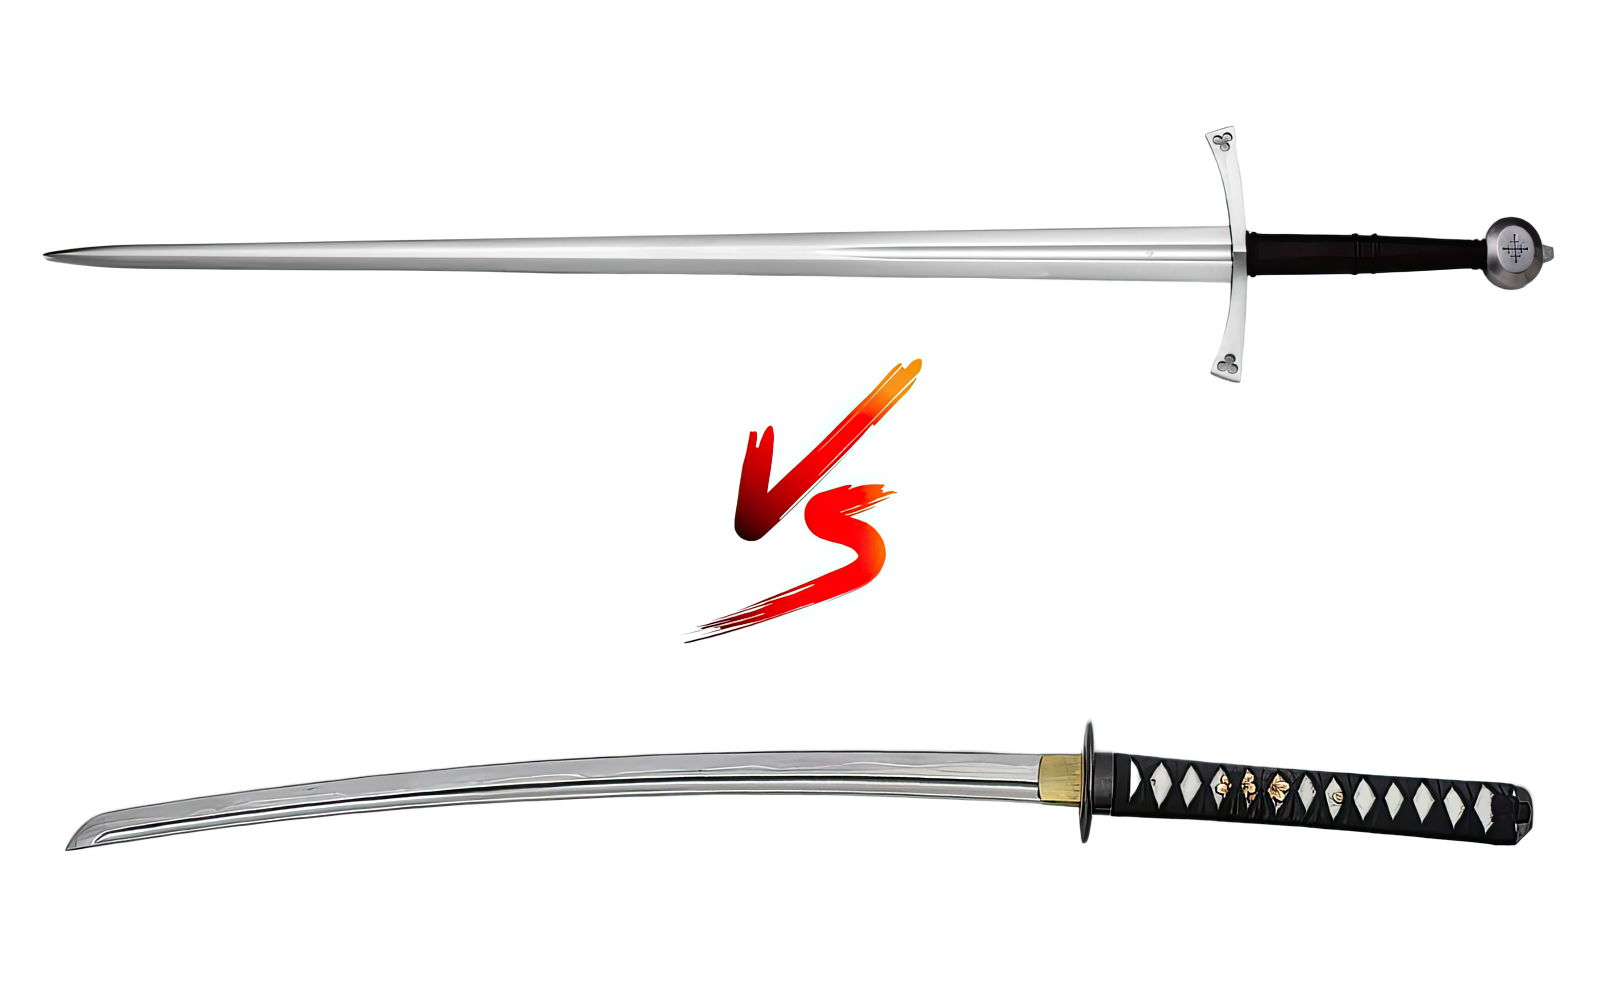 Longsword vs Katana: Finding the Superior Sword